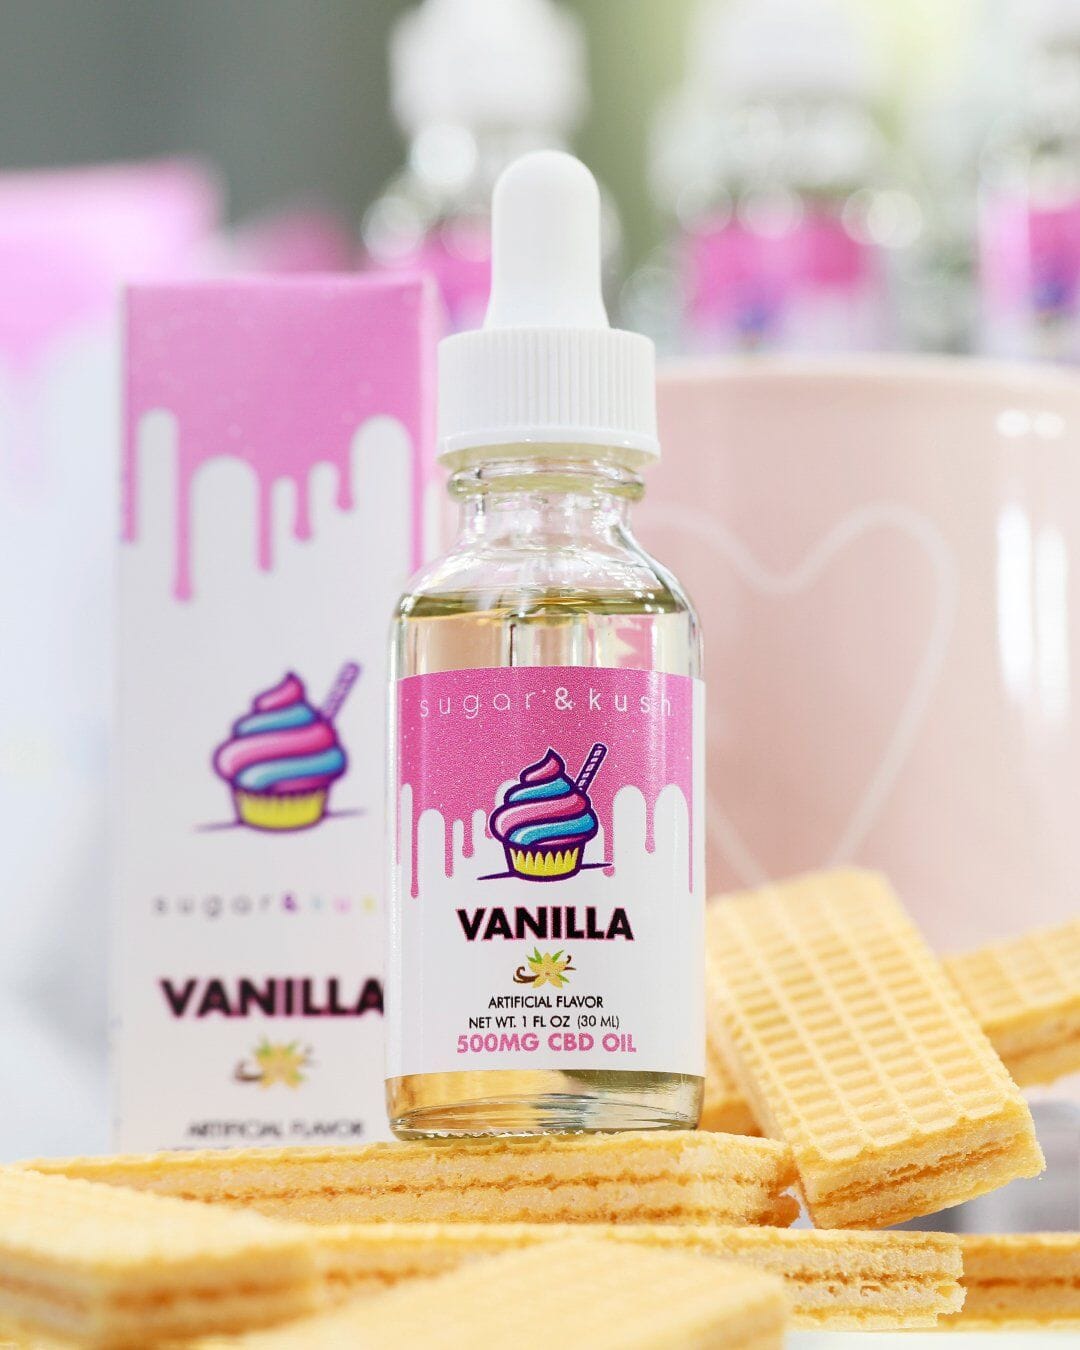 Buy the best Vanilla CBD Oil and CBD Oil drops from Sugar & Kush. Buy top-rated cbd oil vanilla with Sugar & Kush coupon codes.